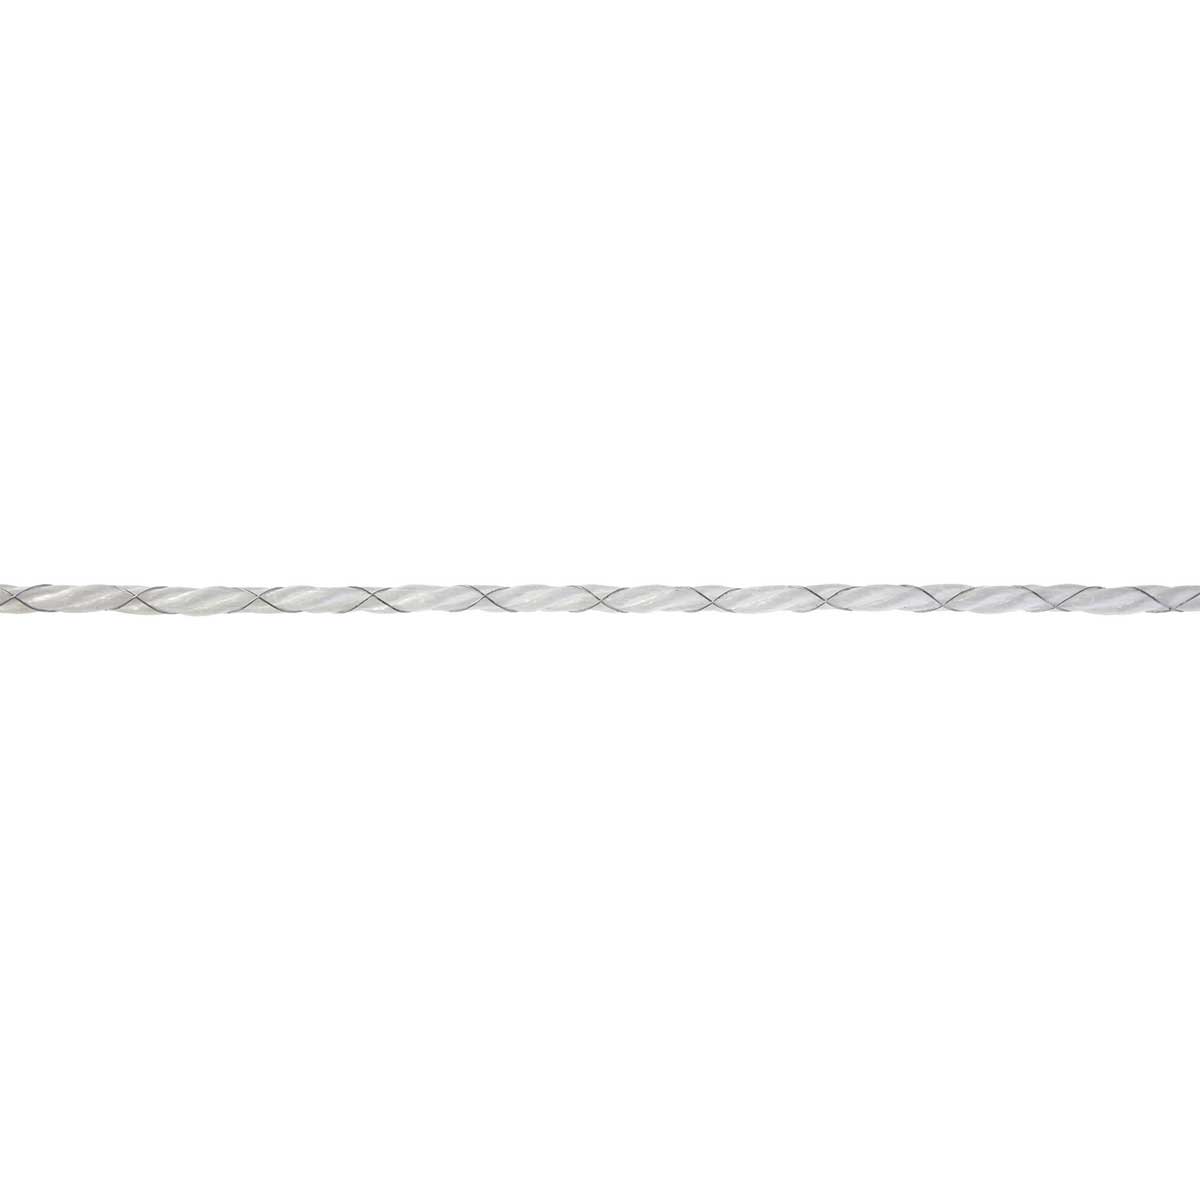 Fencing Rope BASIC white  6mm, 200m, 2x 0,50 Fe galvanized